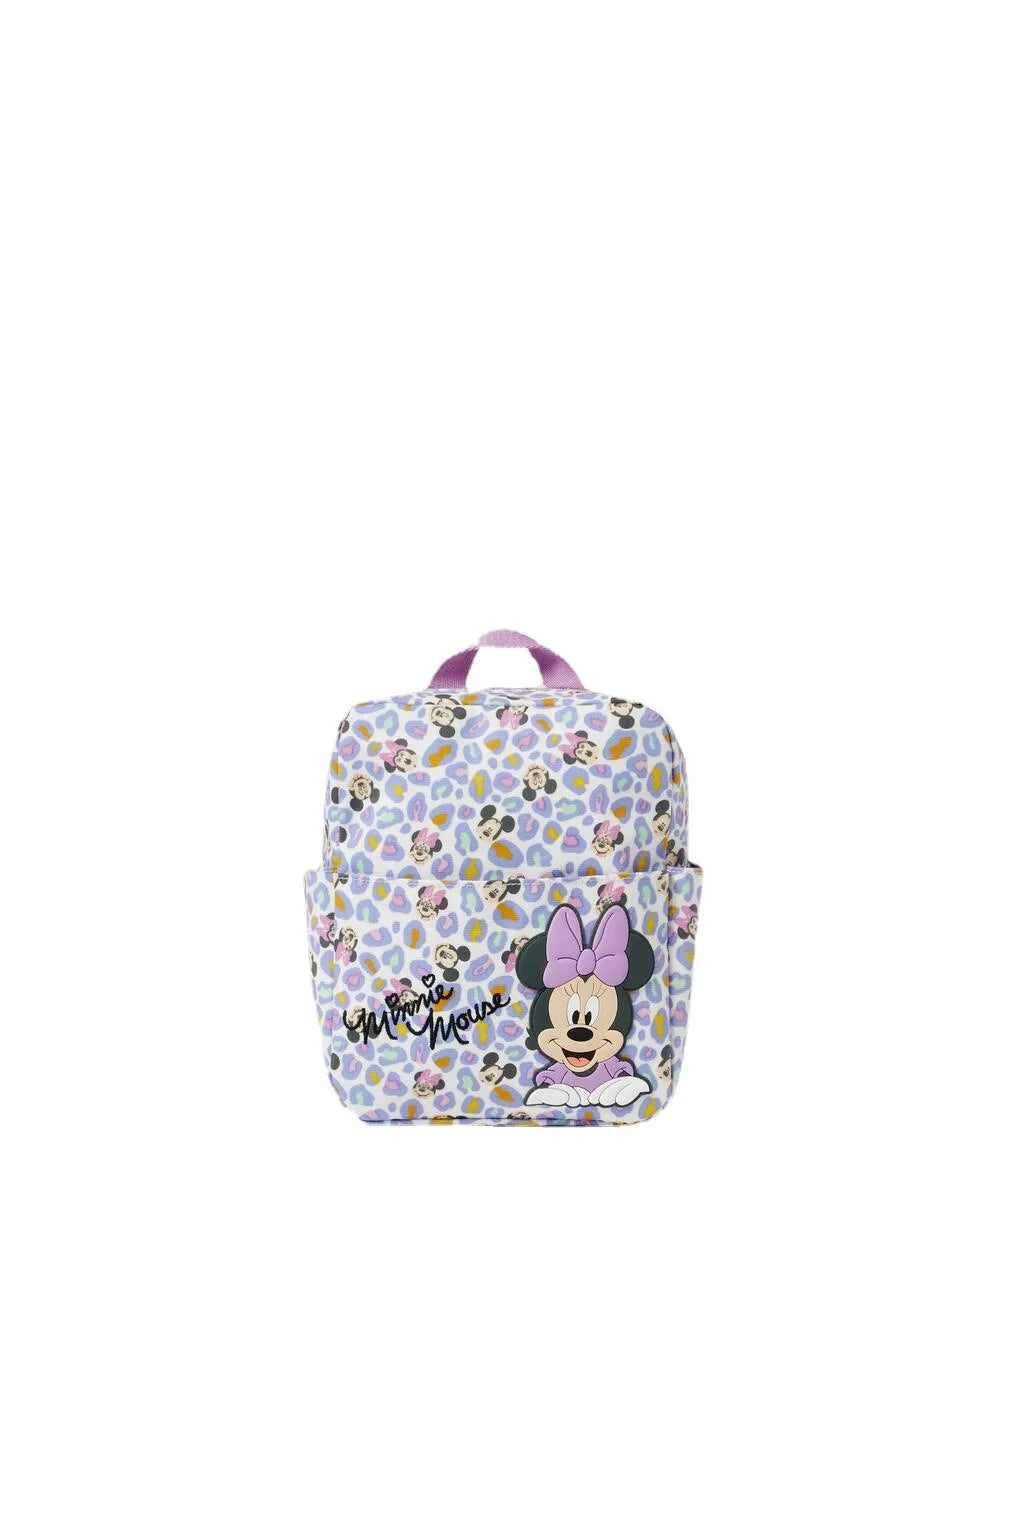 Minnie Cute Baby Girl Backpack Children Bag Fashion Popular Brand Kids Schoolbag Toddler Accessory Bags Cartoon Printed Disney